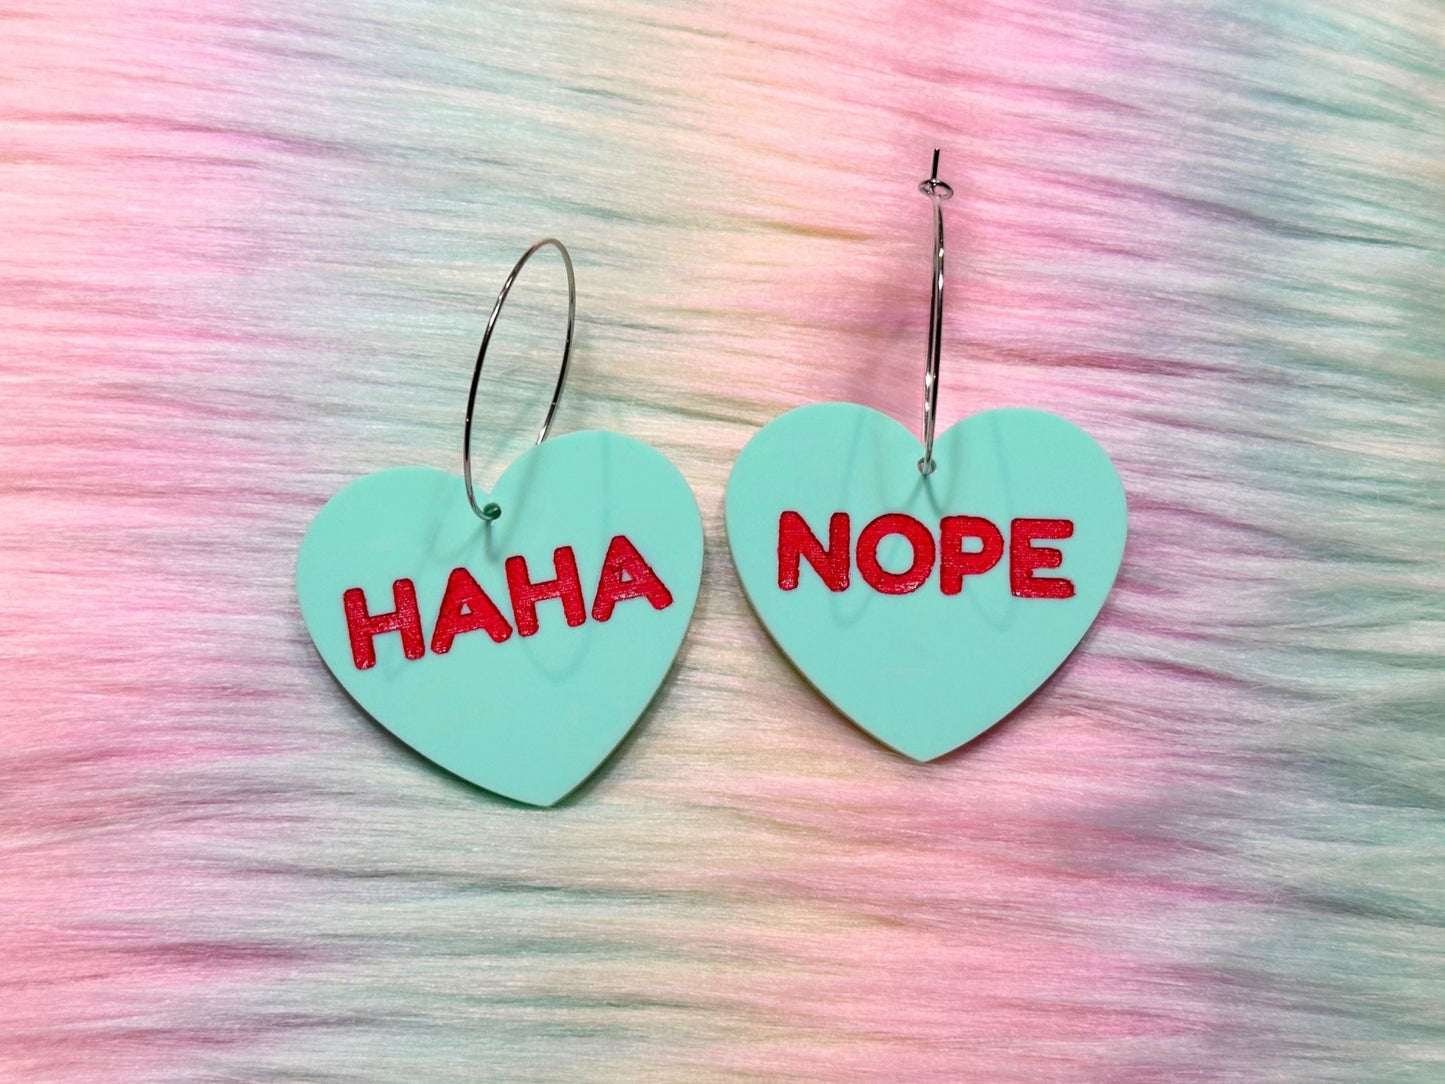 Naughty Heart Earrings - "Haha, NOPE" - Painted Raina